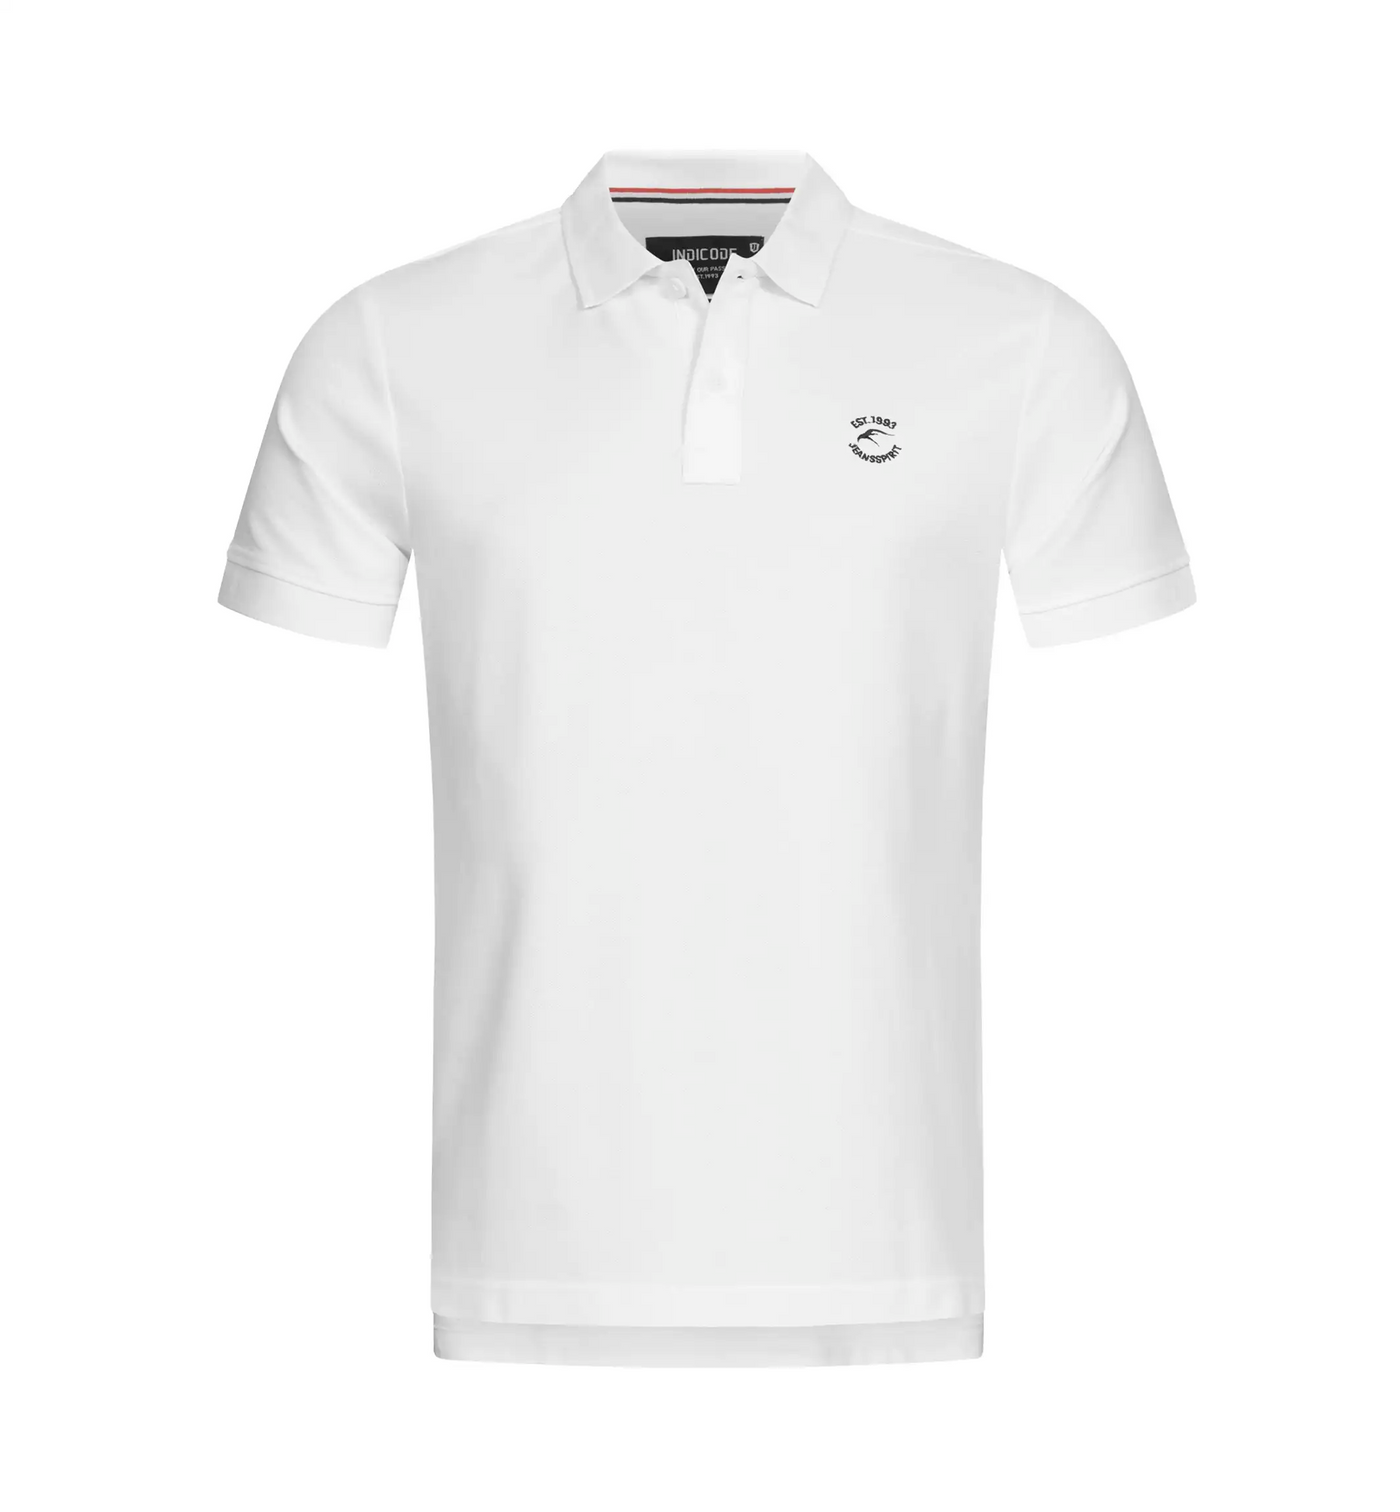 Polo T-shirt 'INWadim' - Offwhite